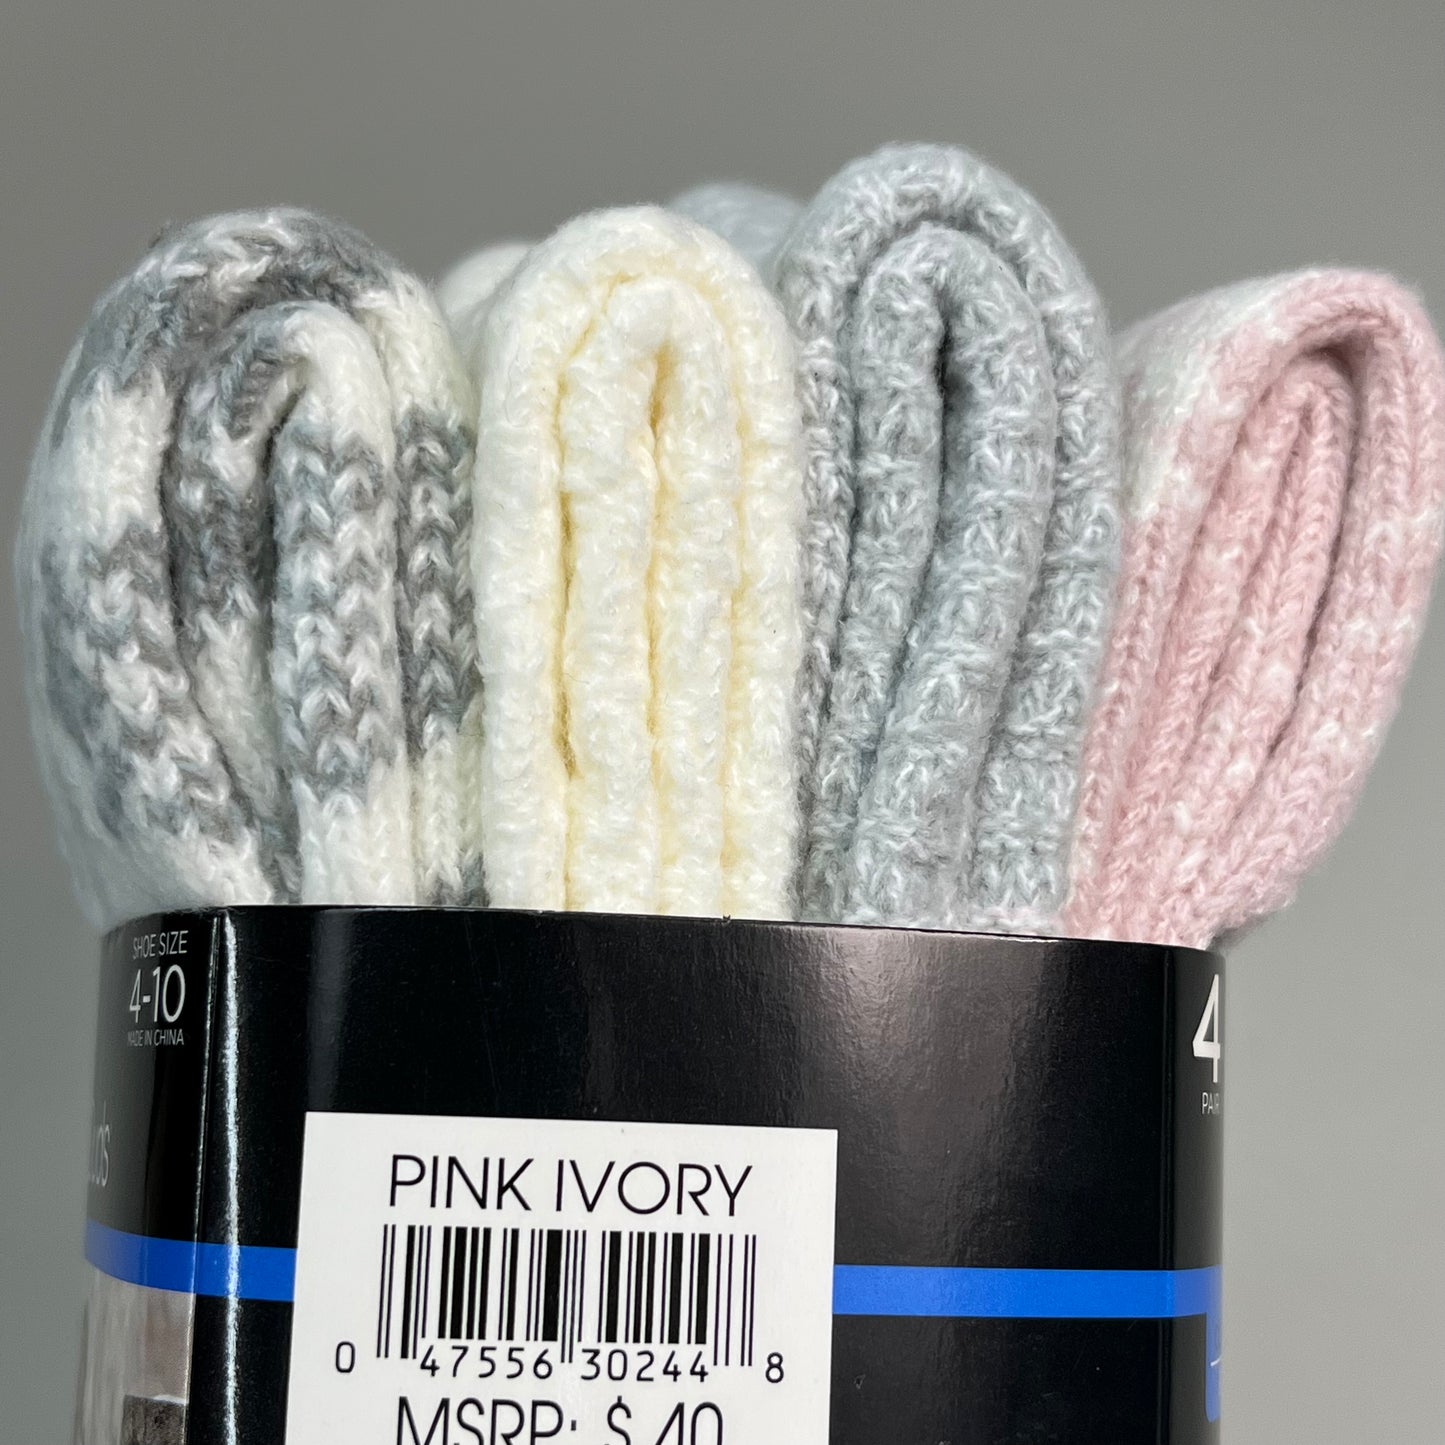 CUDDLE DUDS Soft Boot Crew Socks Plushfill 4 Pair Sz 4-10 Pink Ivory (New)